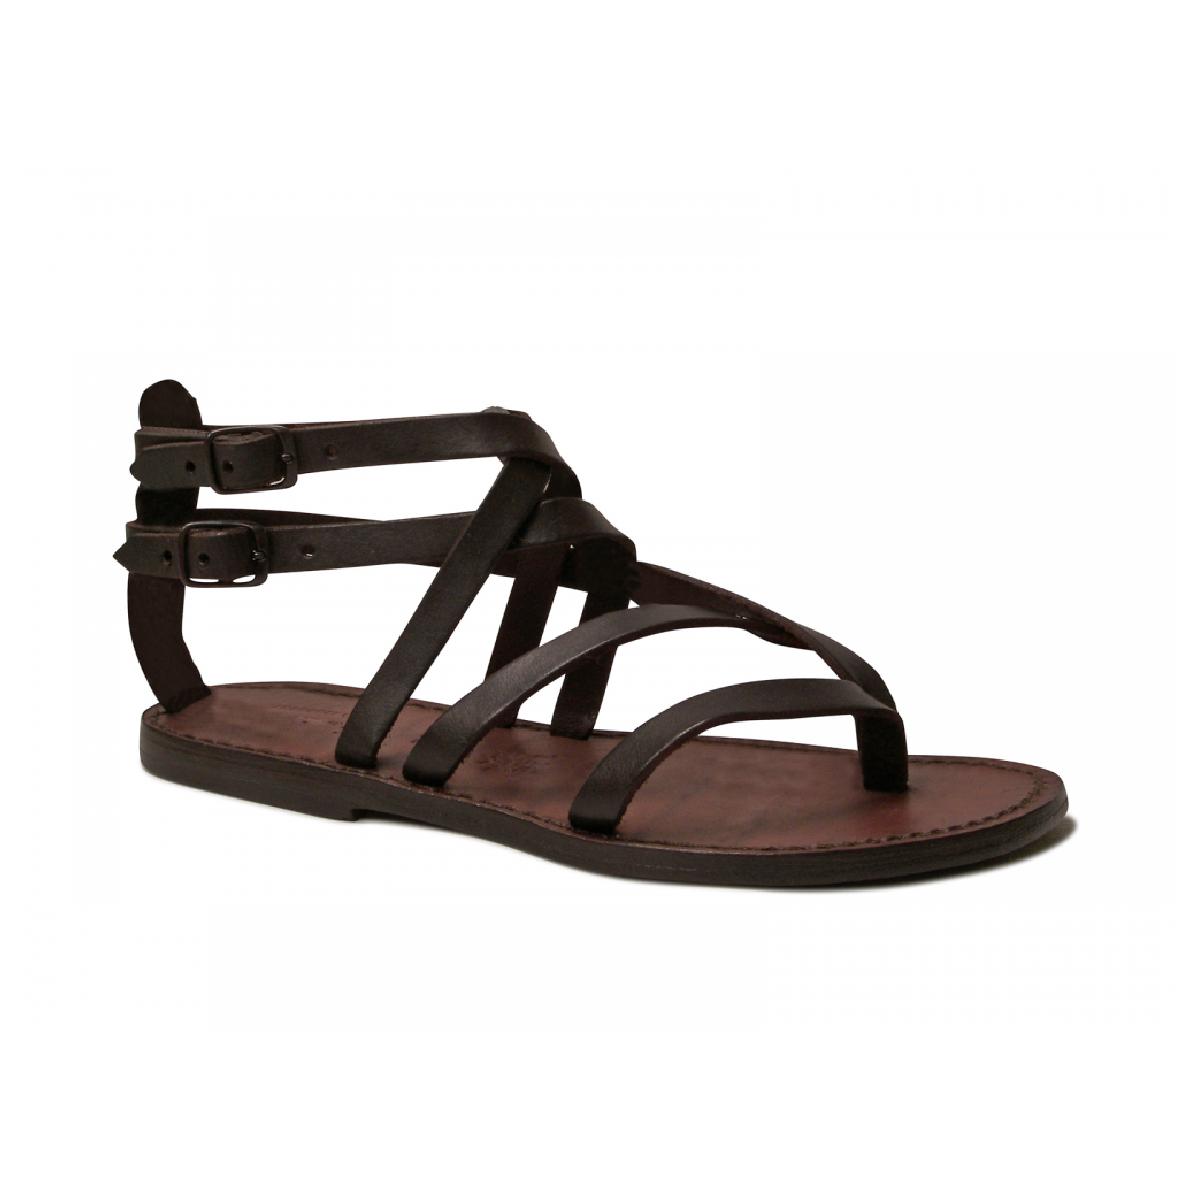 Handmade womens flat sandals in dark brown leather | Gianluca - The ...